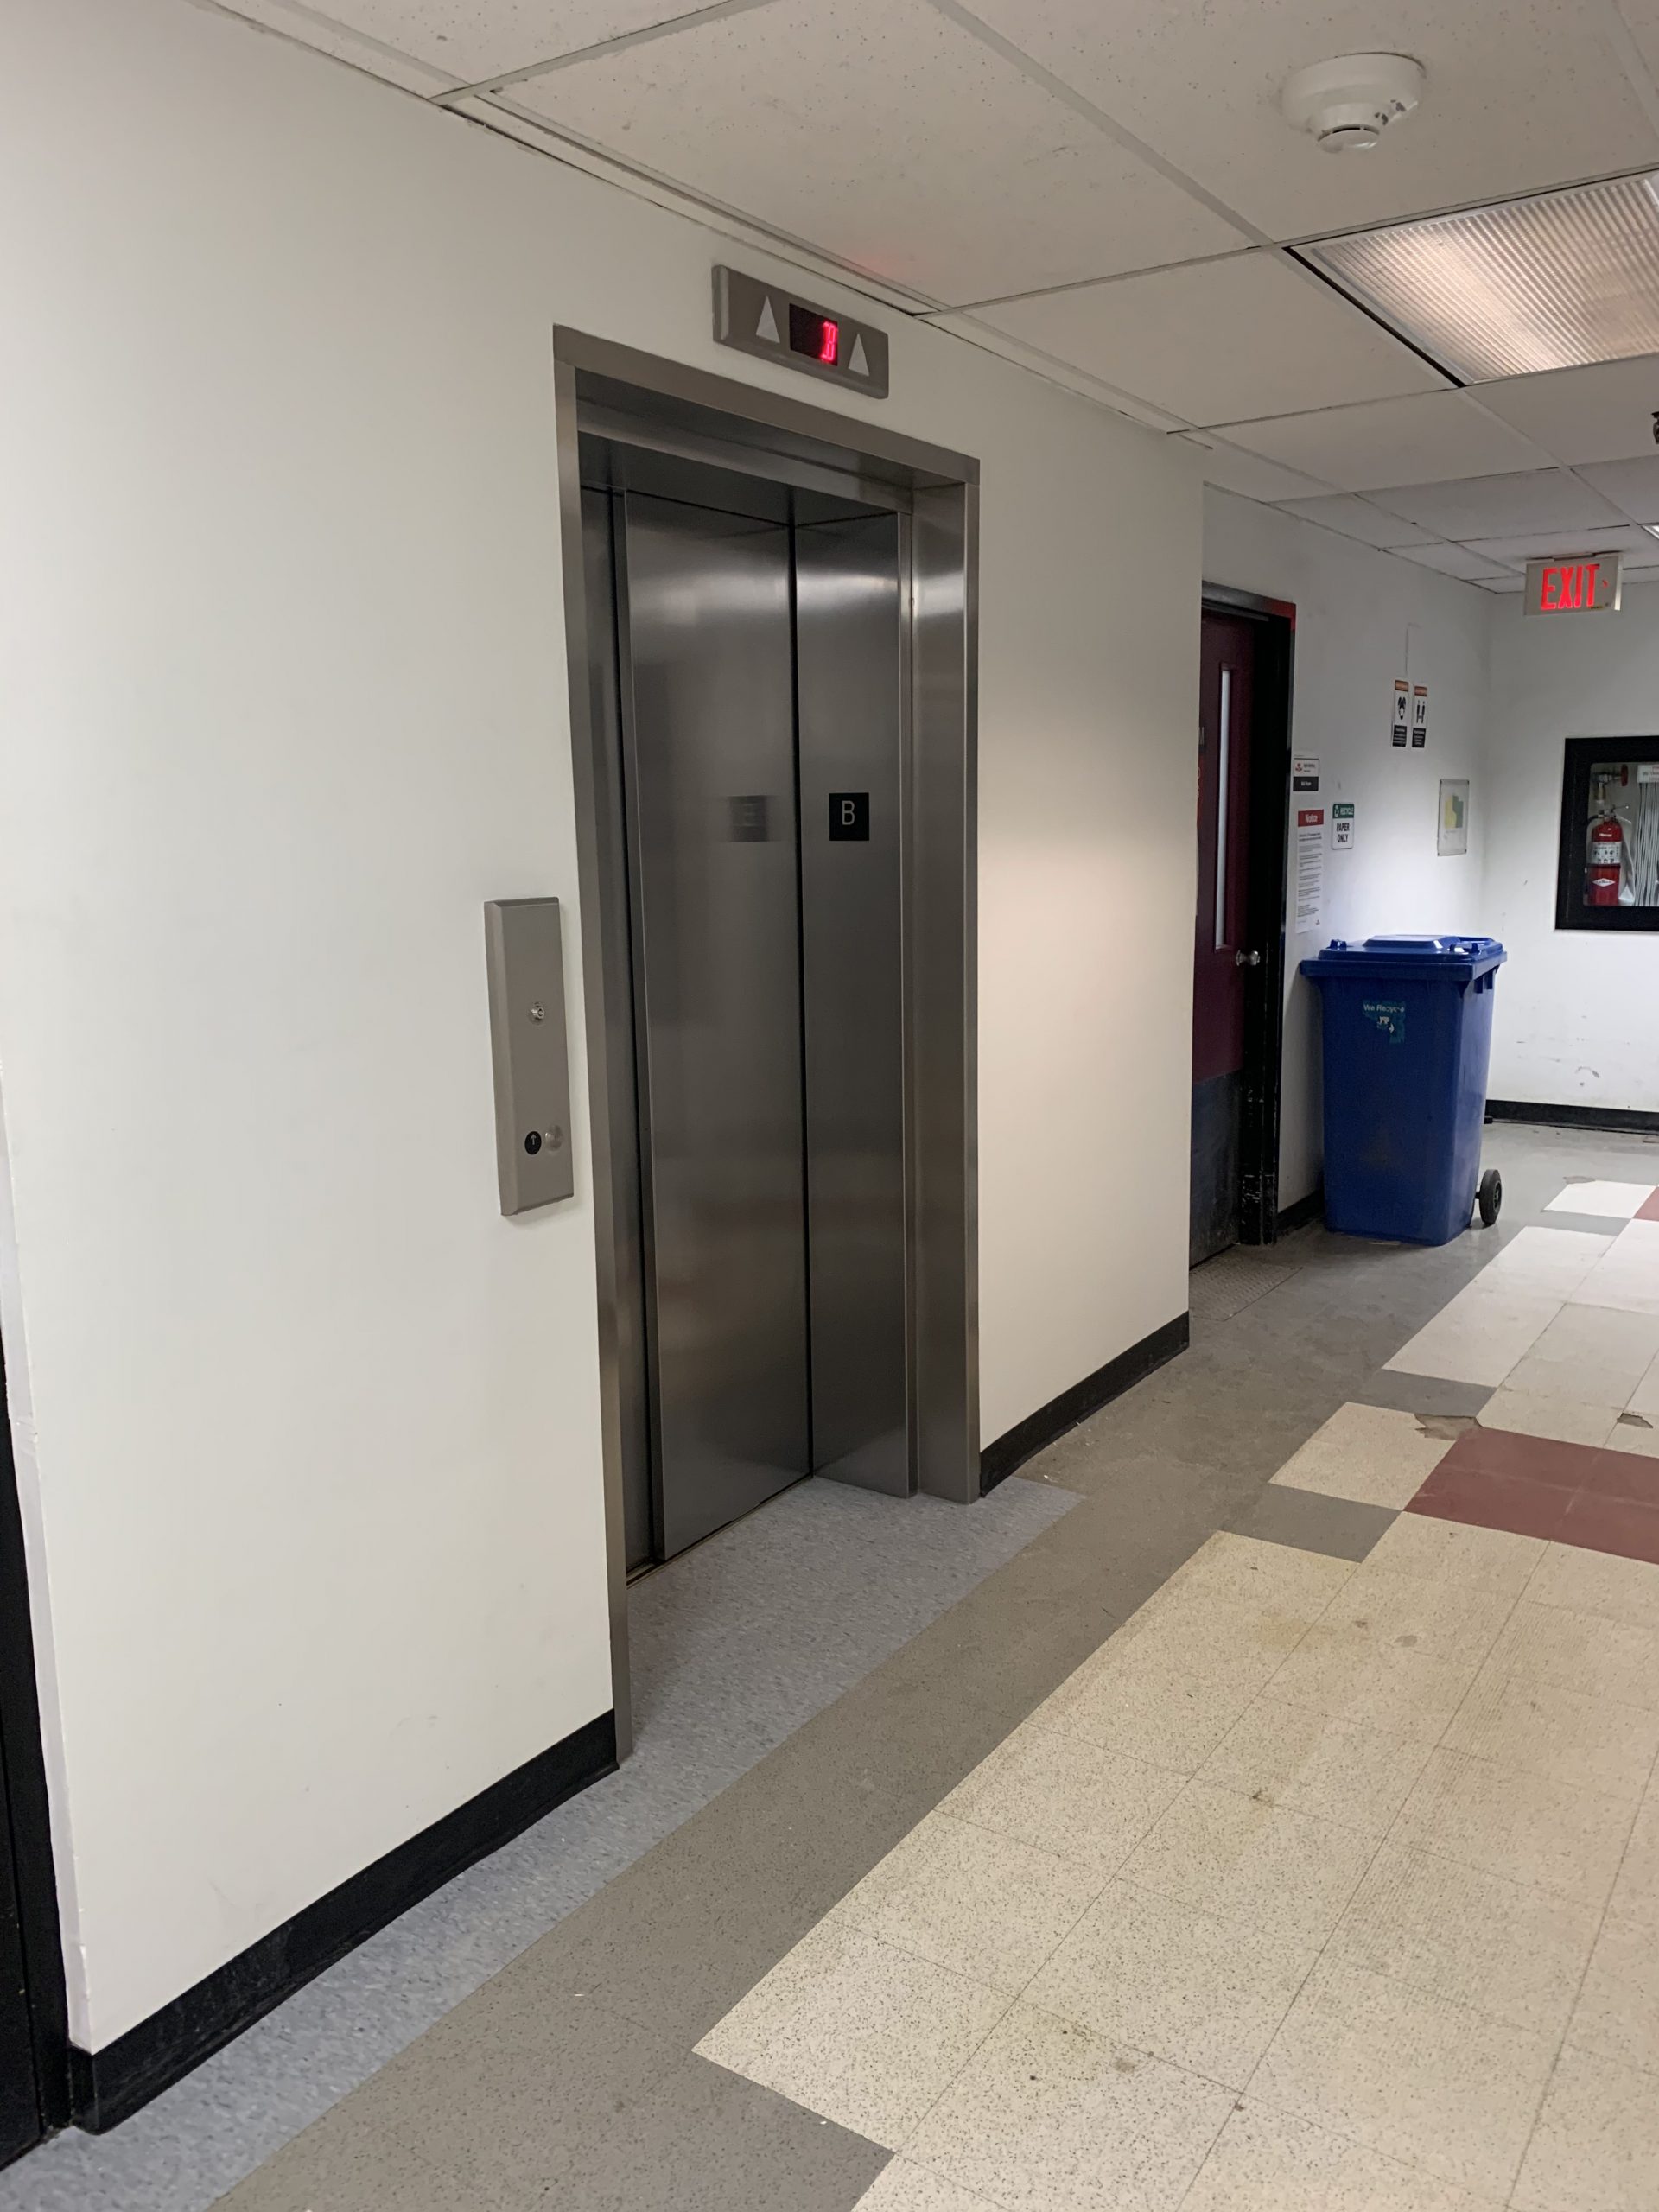 TTC Inglis Building Passenger Elevator Overhaul